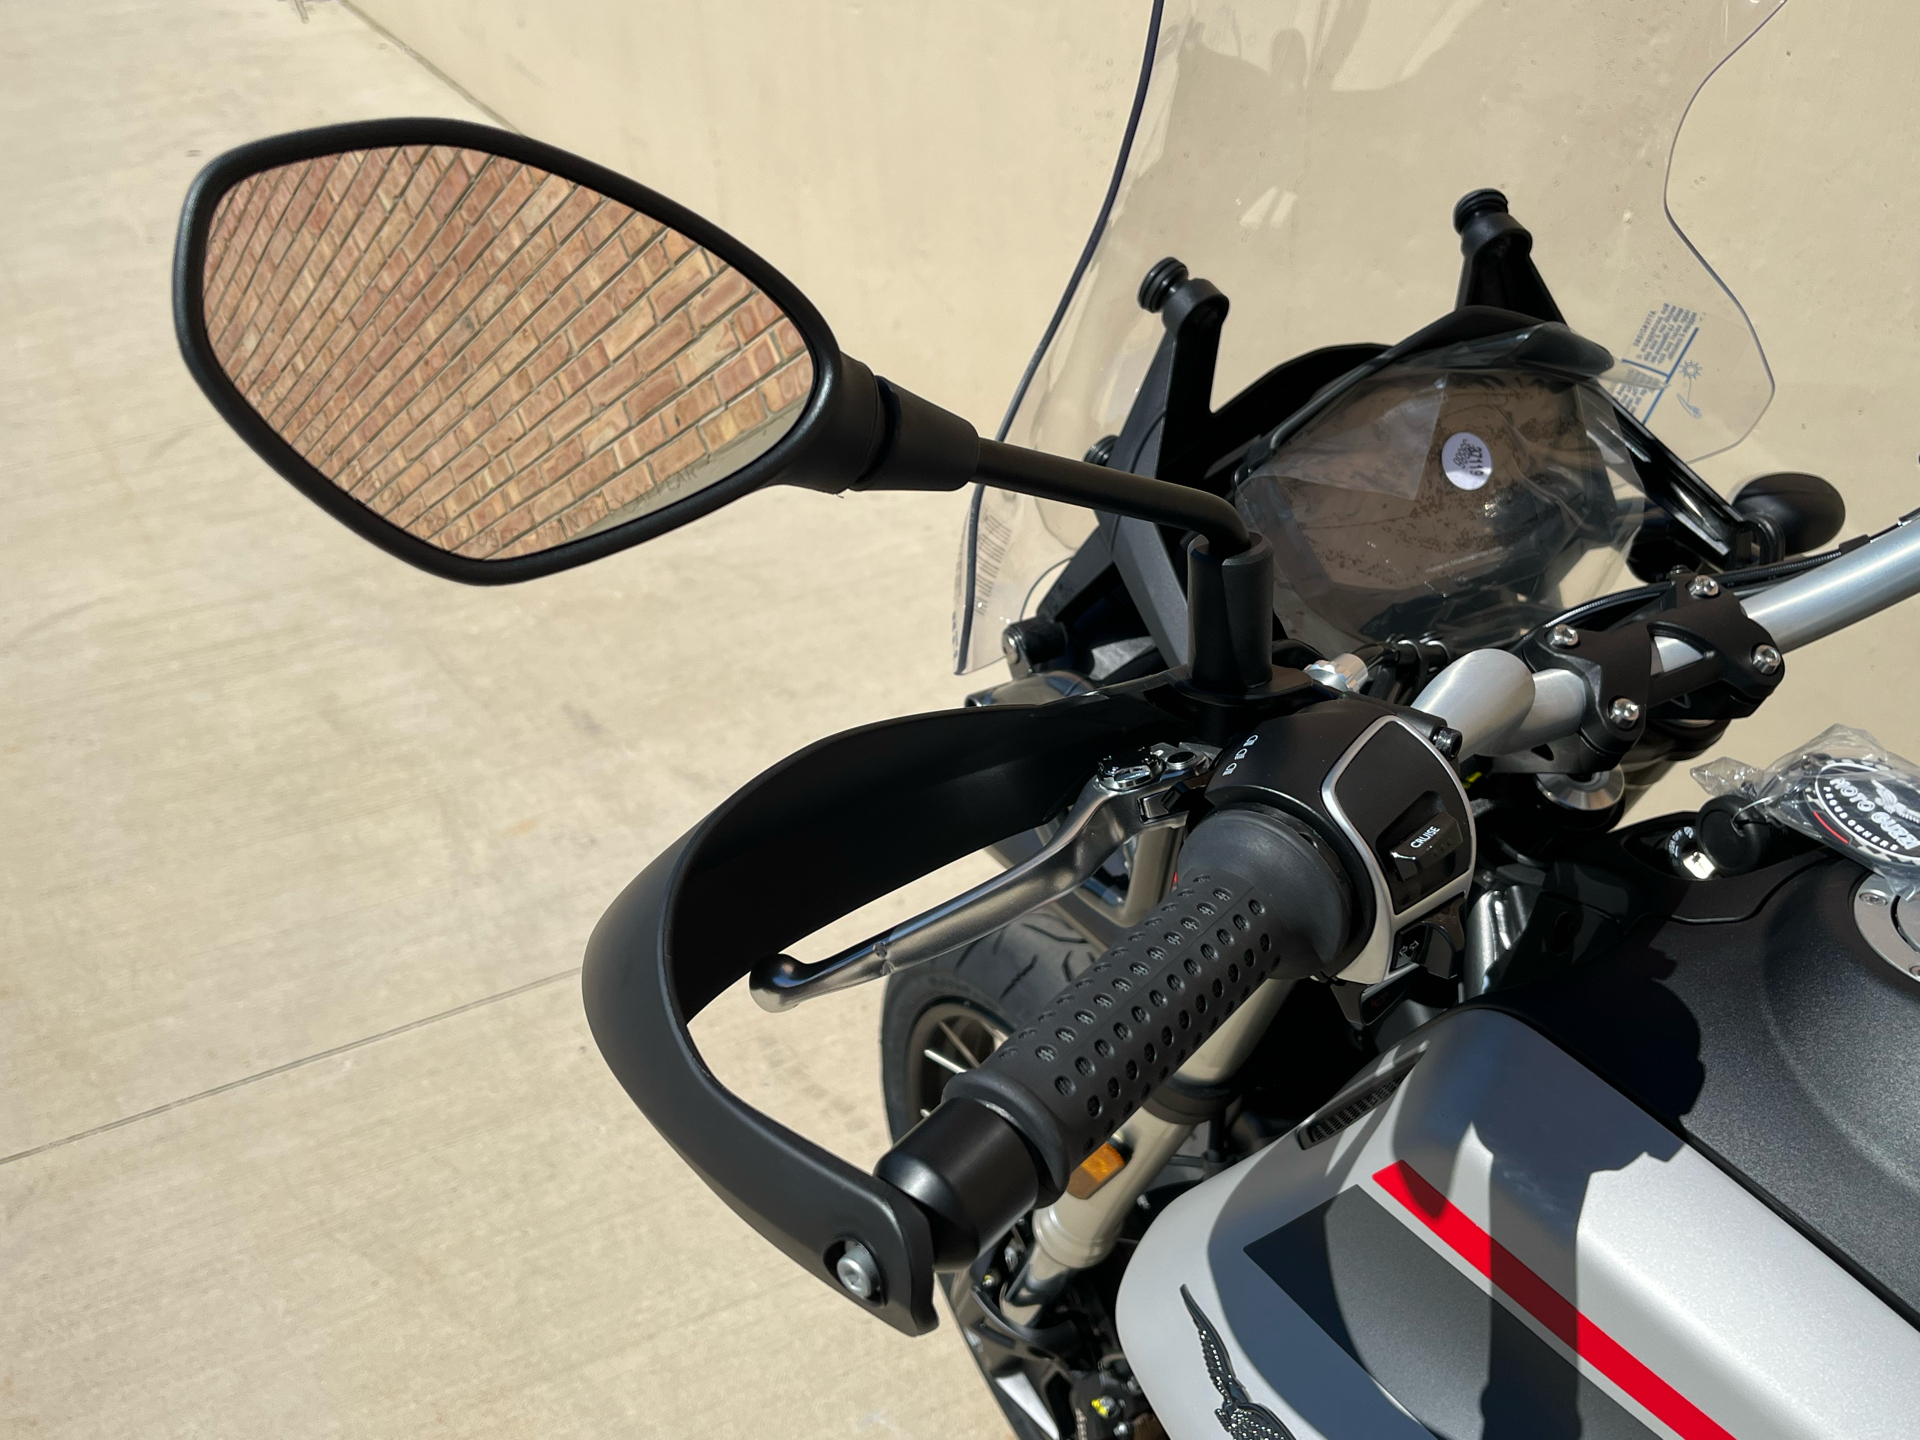 2022 Moto Guzzi V85 TT Travel in Roselle, Illinois - Photo 10